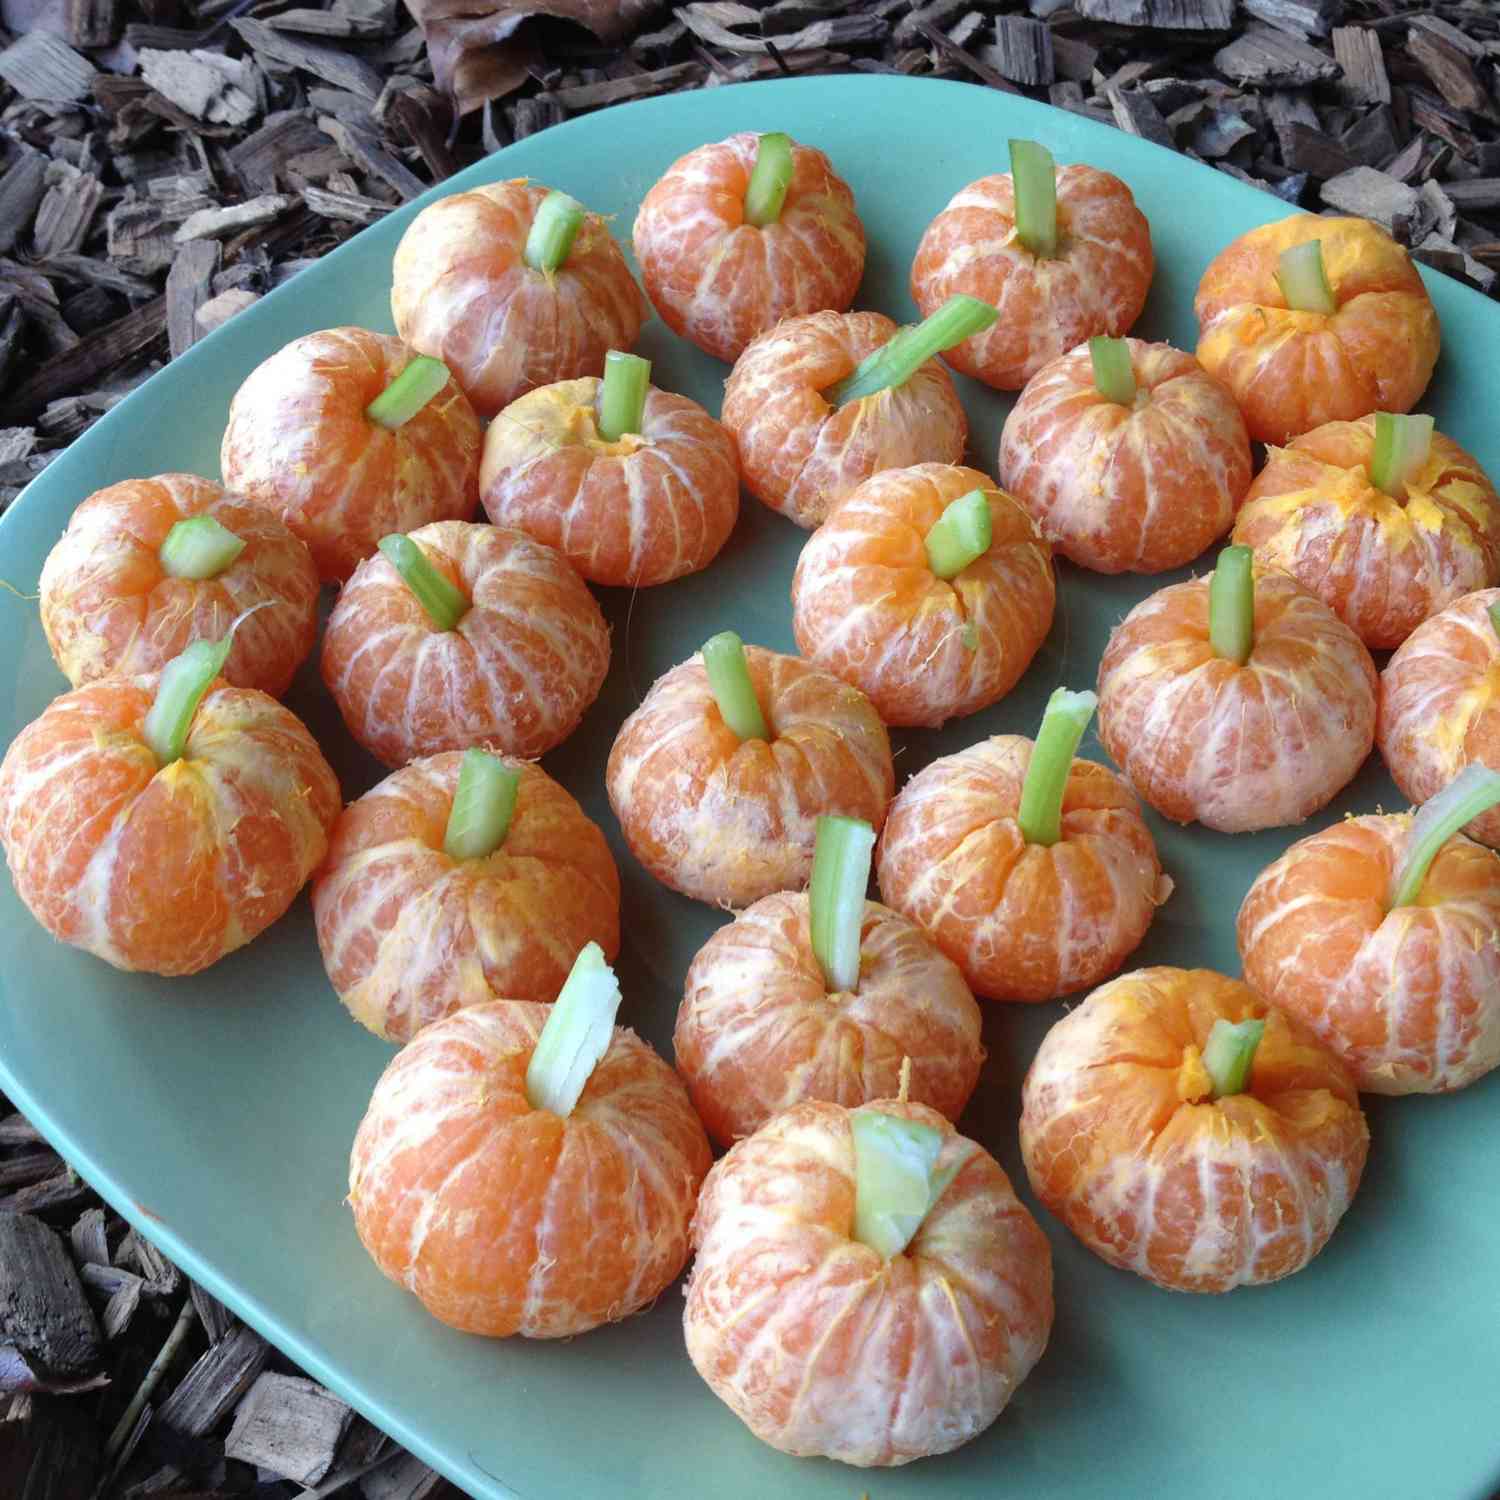 Mandarin Pumpkins